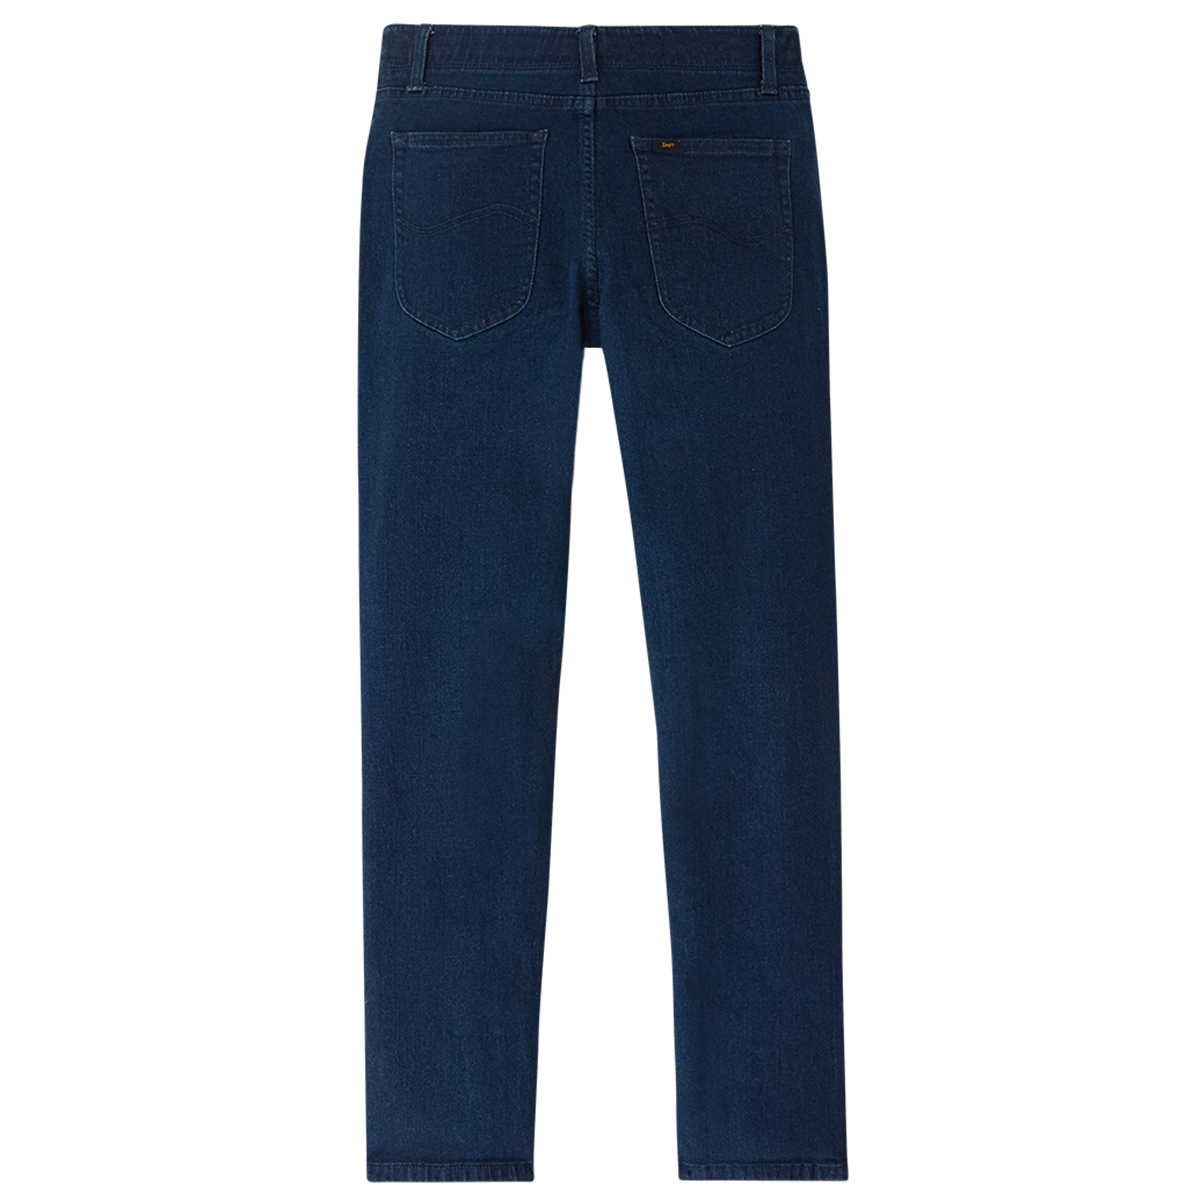 Boys (8-20) Lee(R) Premium Straight Stretch Xtreme Jeans - Husky